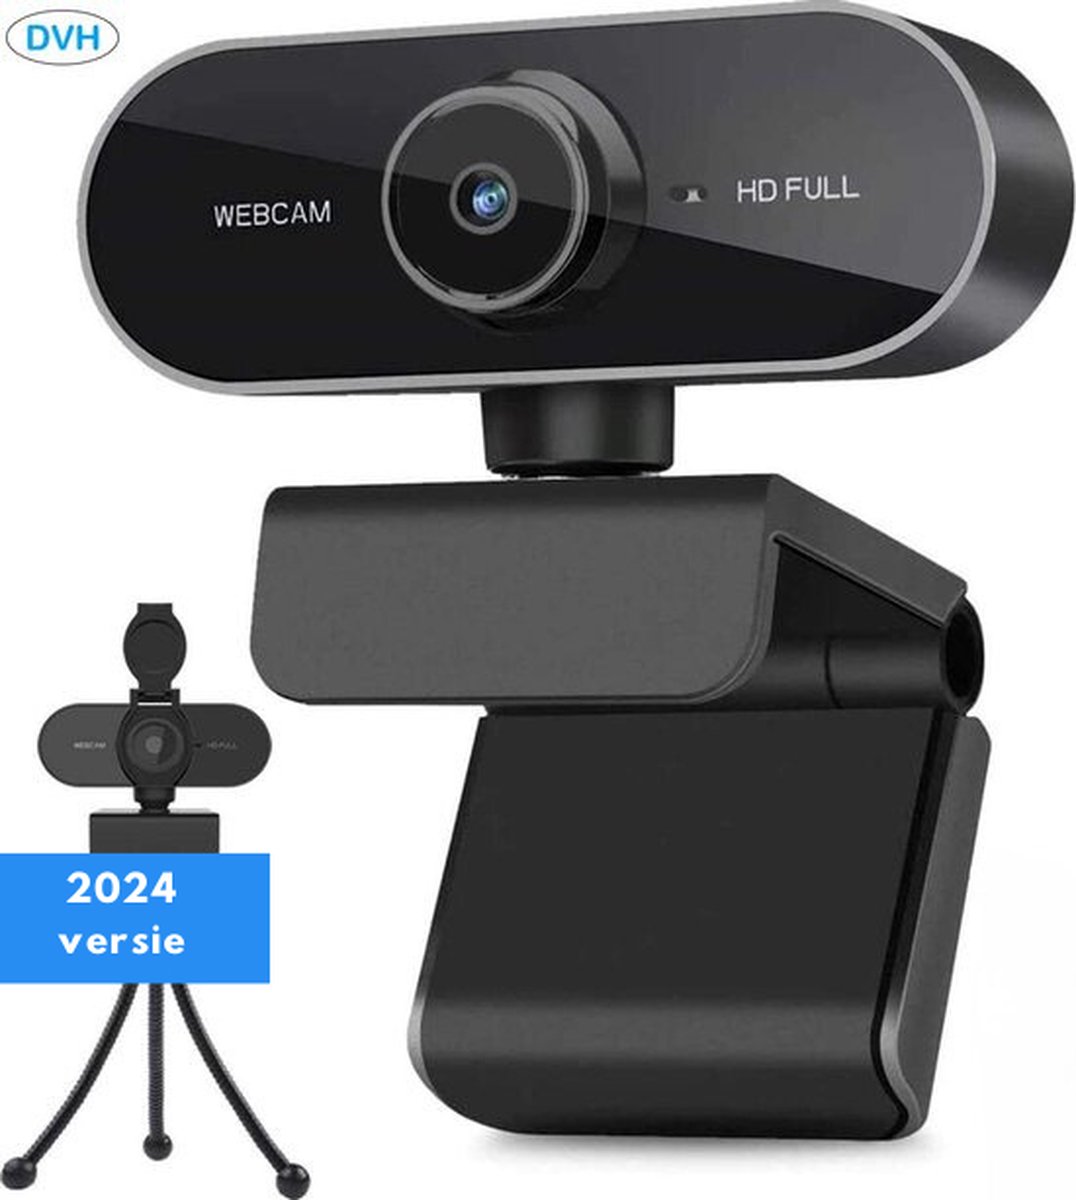 DVH Webcam voor Pc met Microfoon - Full HD 1080P - USB Aansluiting - Met Webcam Cover - Windows en Macbook